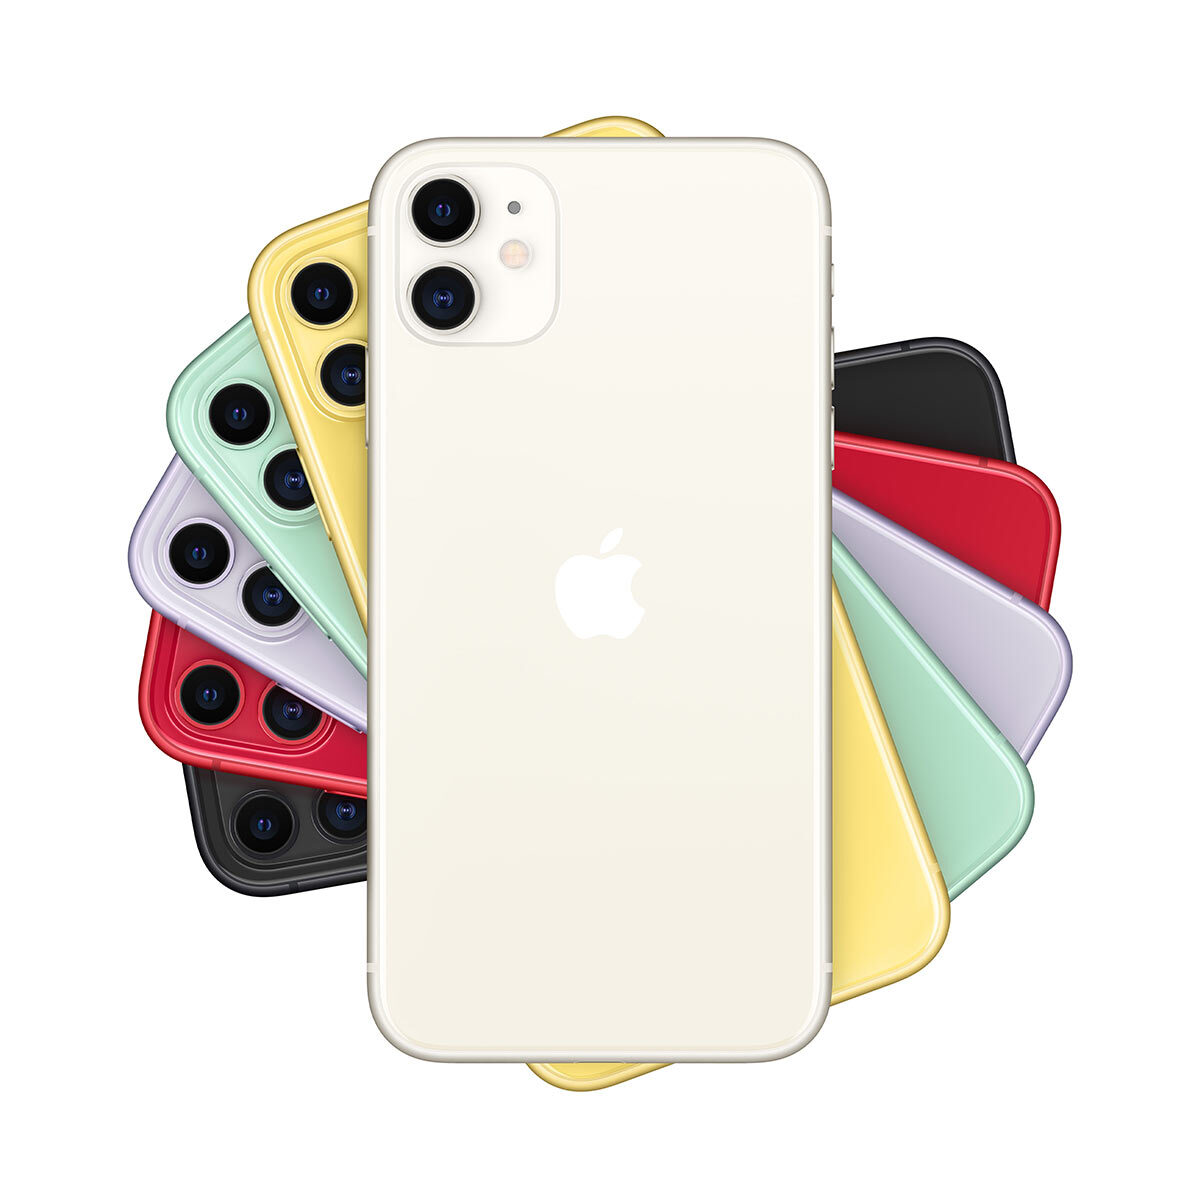 Buy Apple iPhone 11 128GB Sim Free Mobile Phone in White, MHDJ3B/A at costco.co.uk